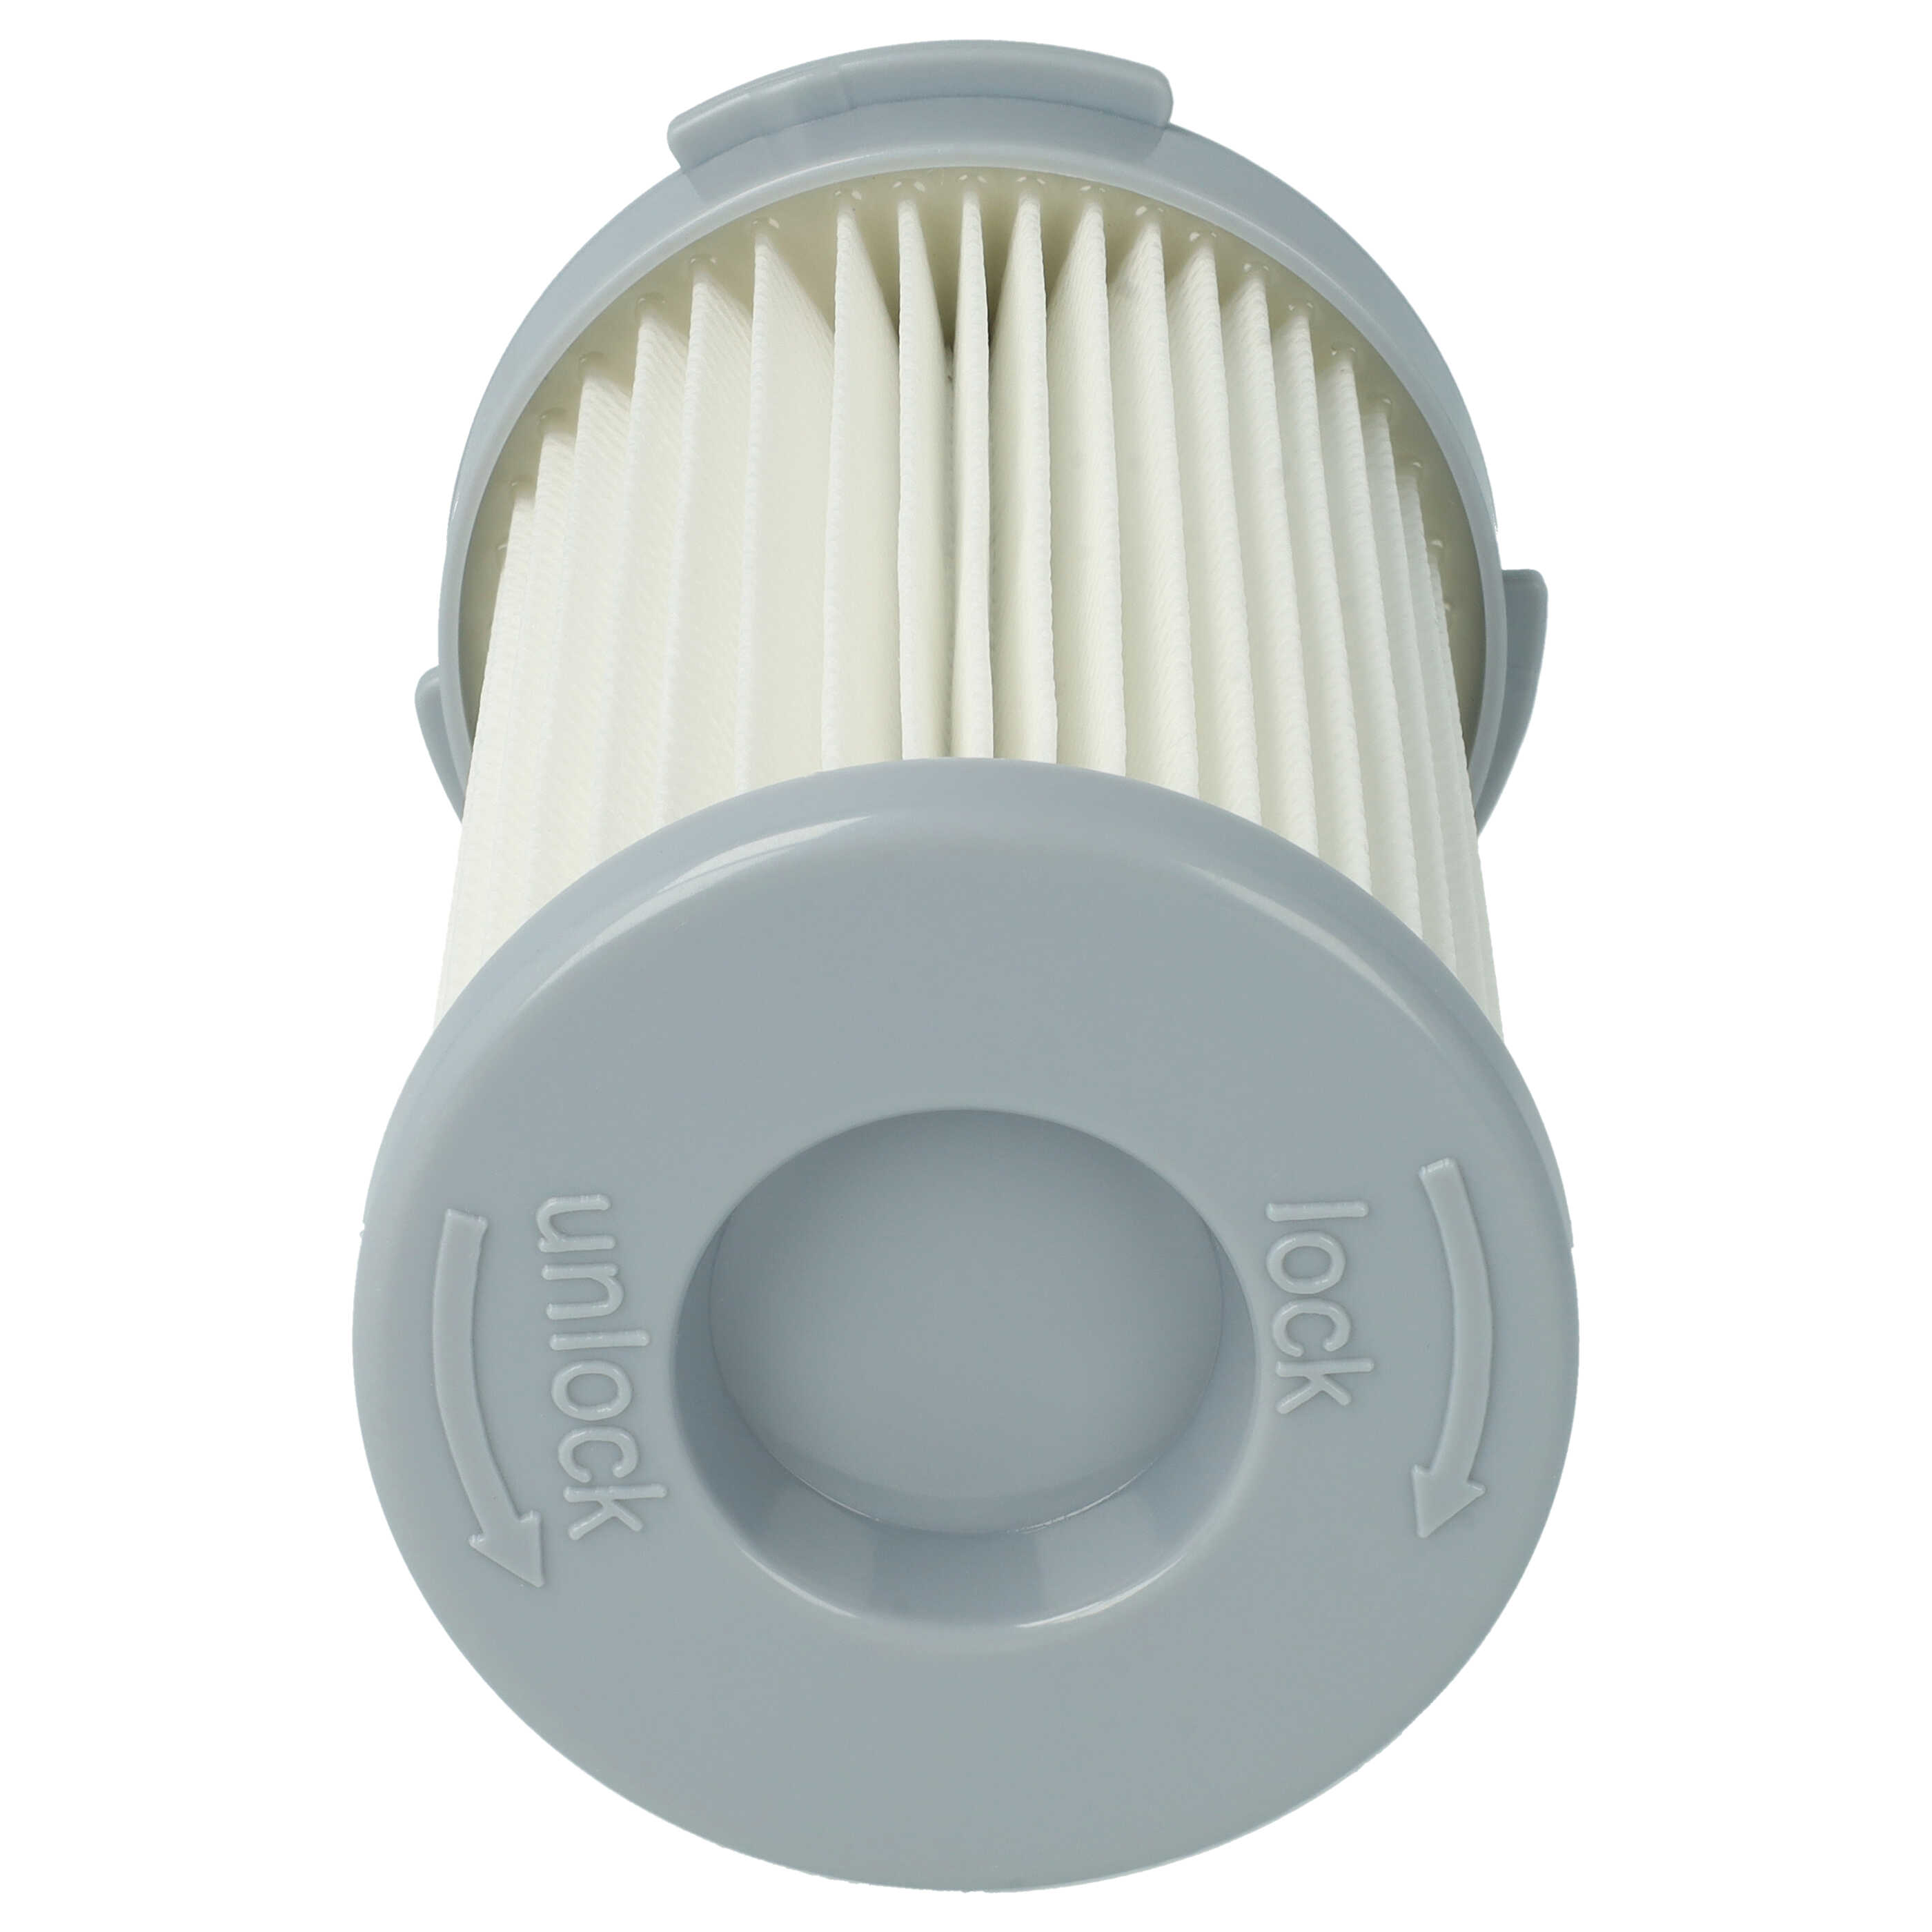 Filtro reemplaza Electrolux 9001966051 para aspiradora - filtro Hepa blanco / gris